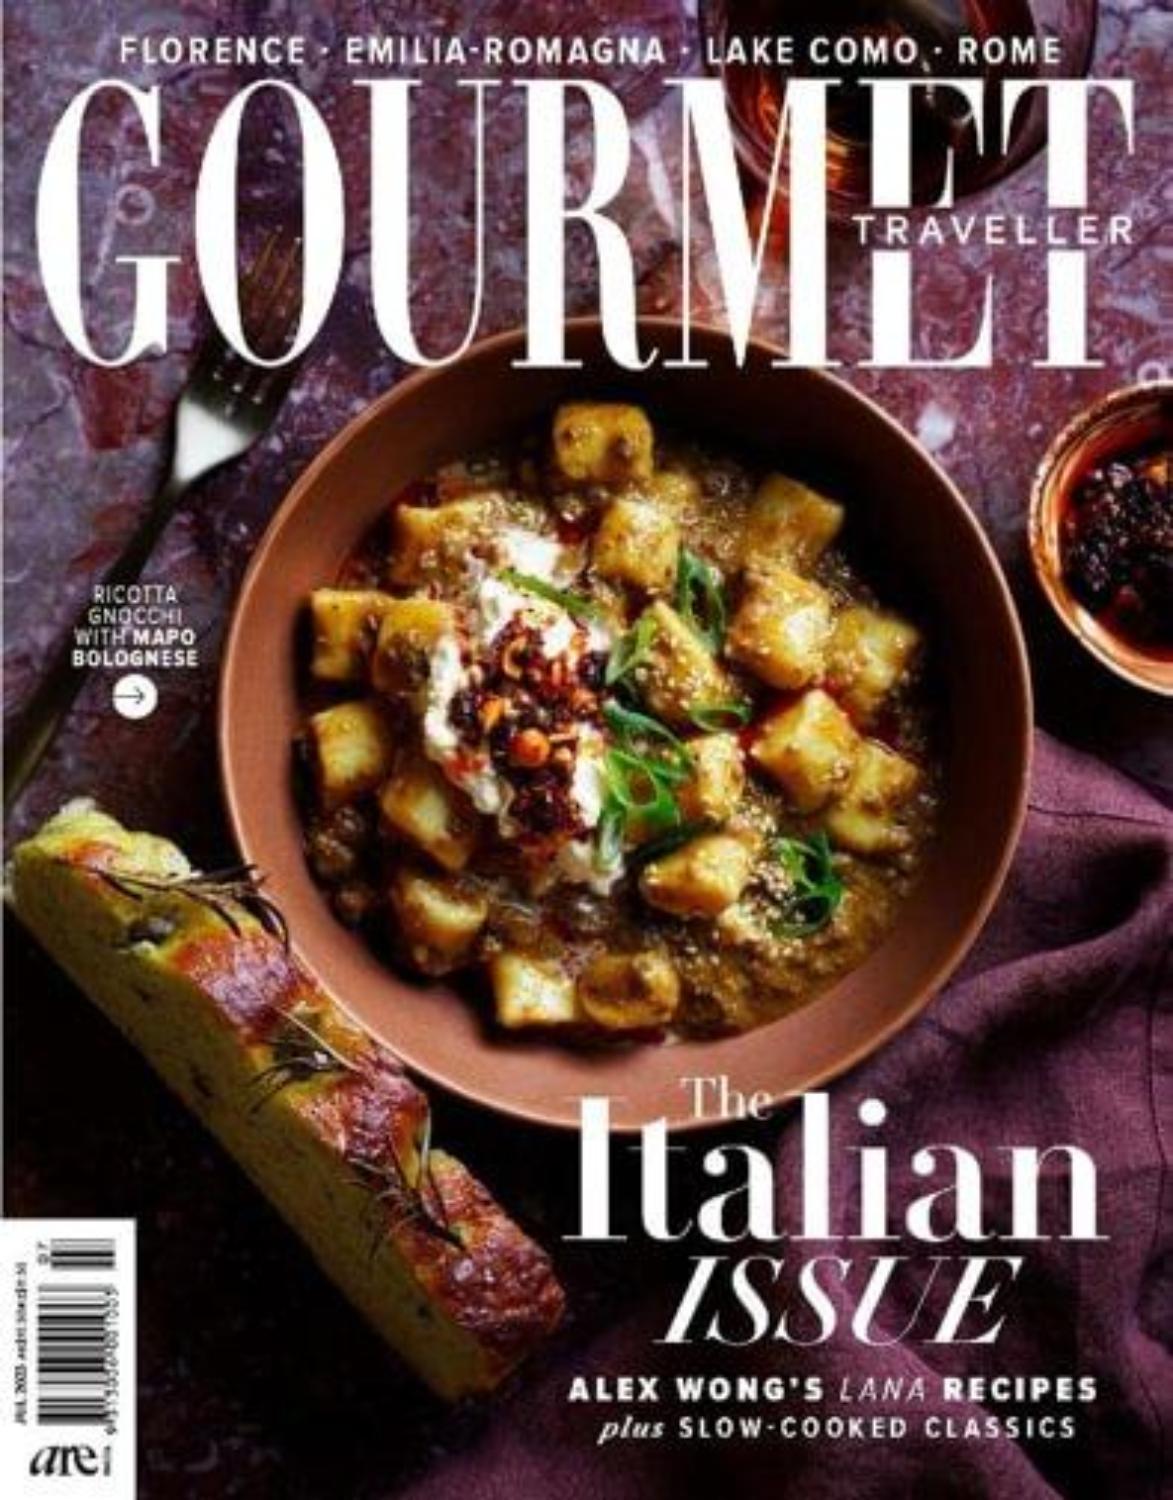 where to buy gourmet traveller magazine